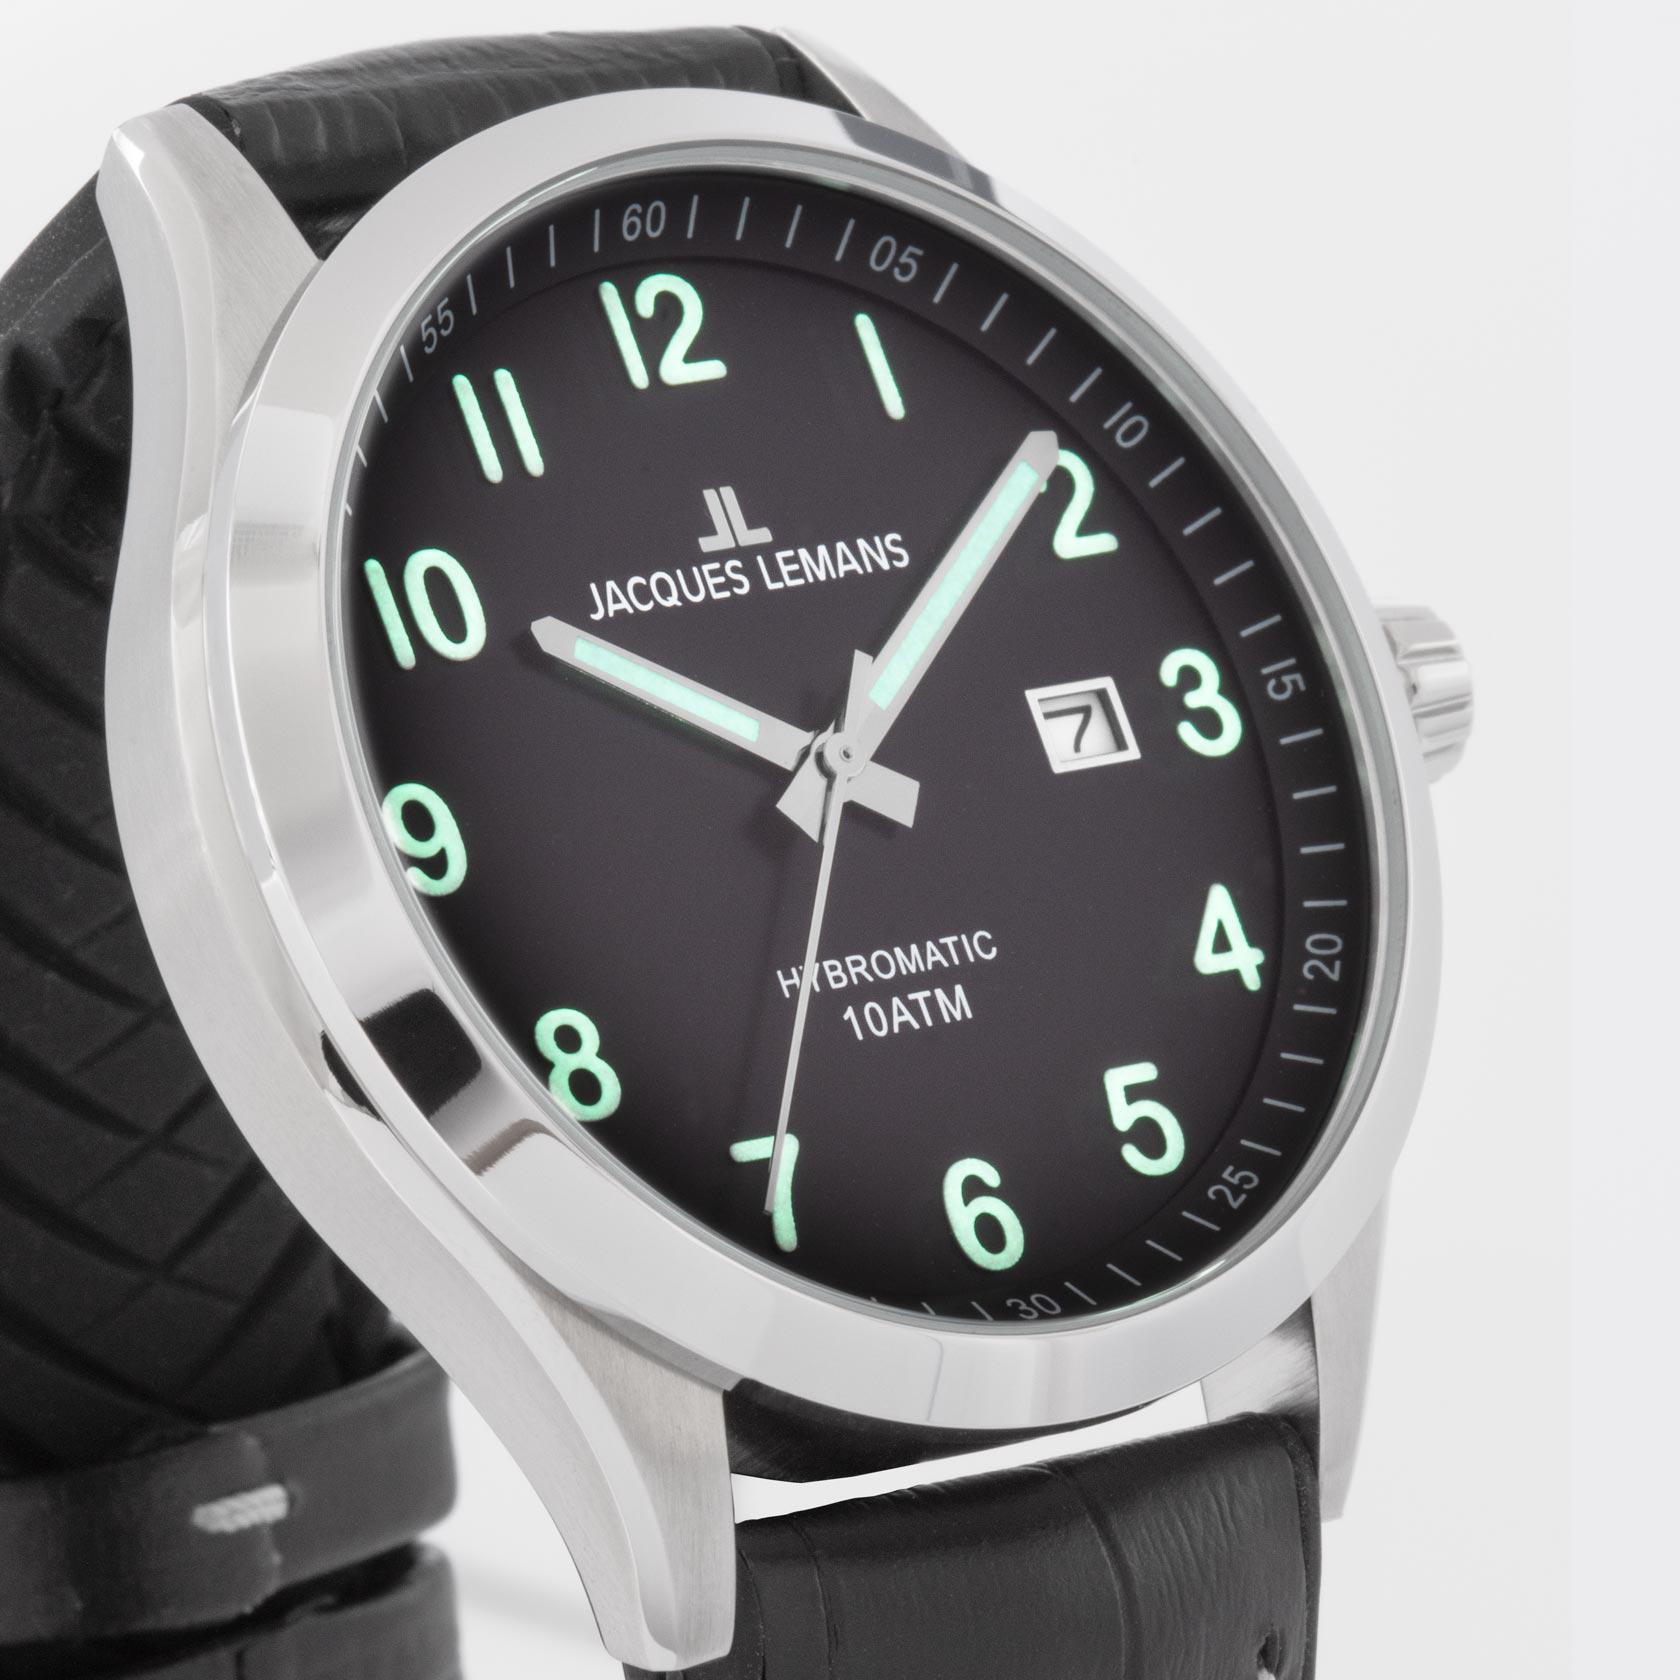 1-2130D, мужские купить Hybromatic Jacques Lemans часы 